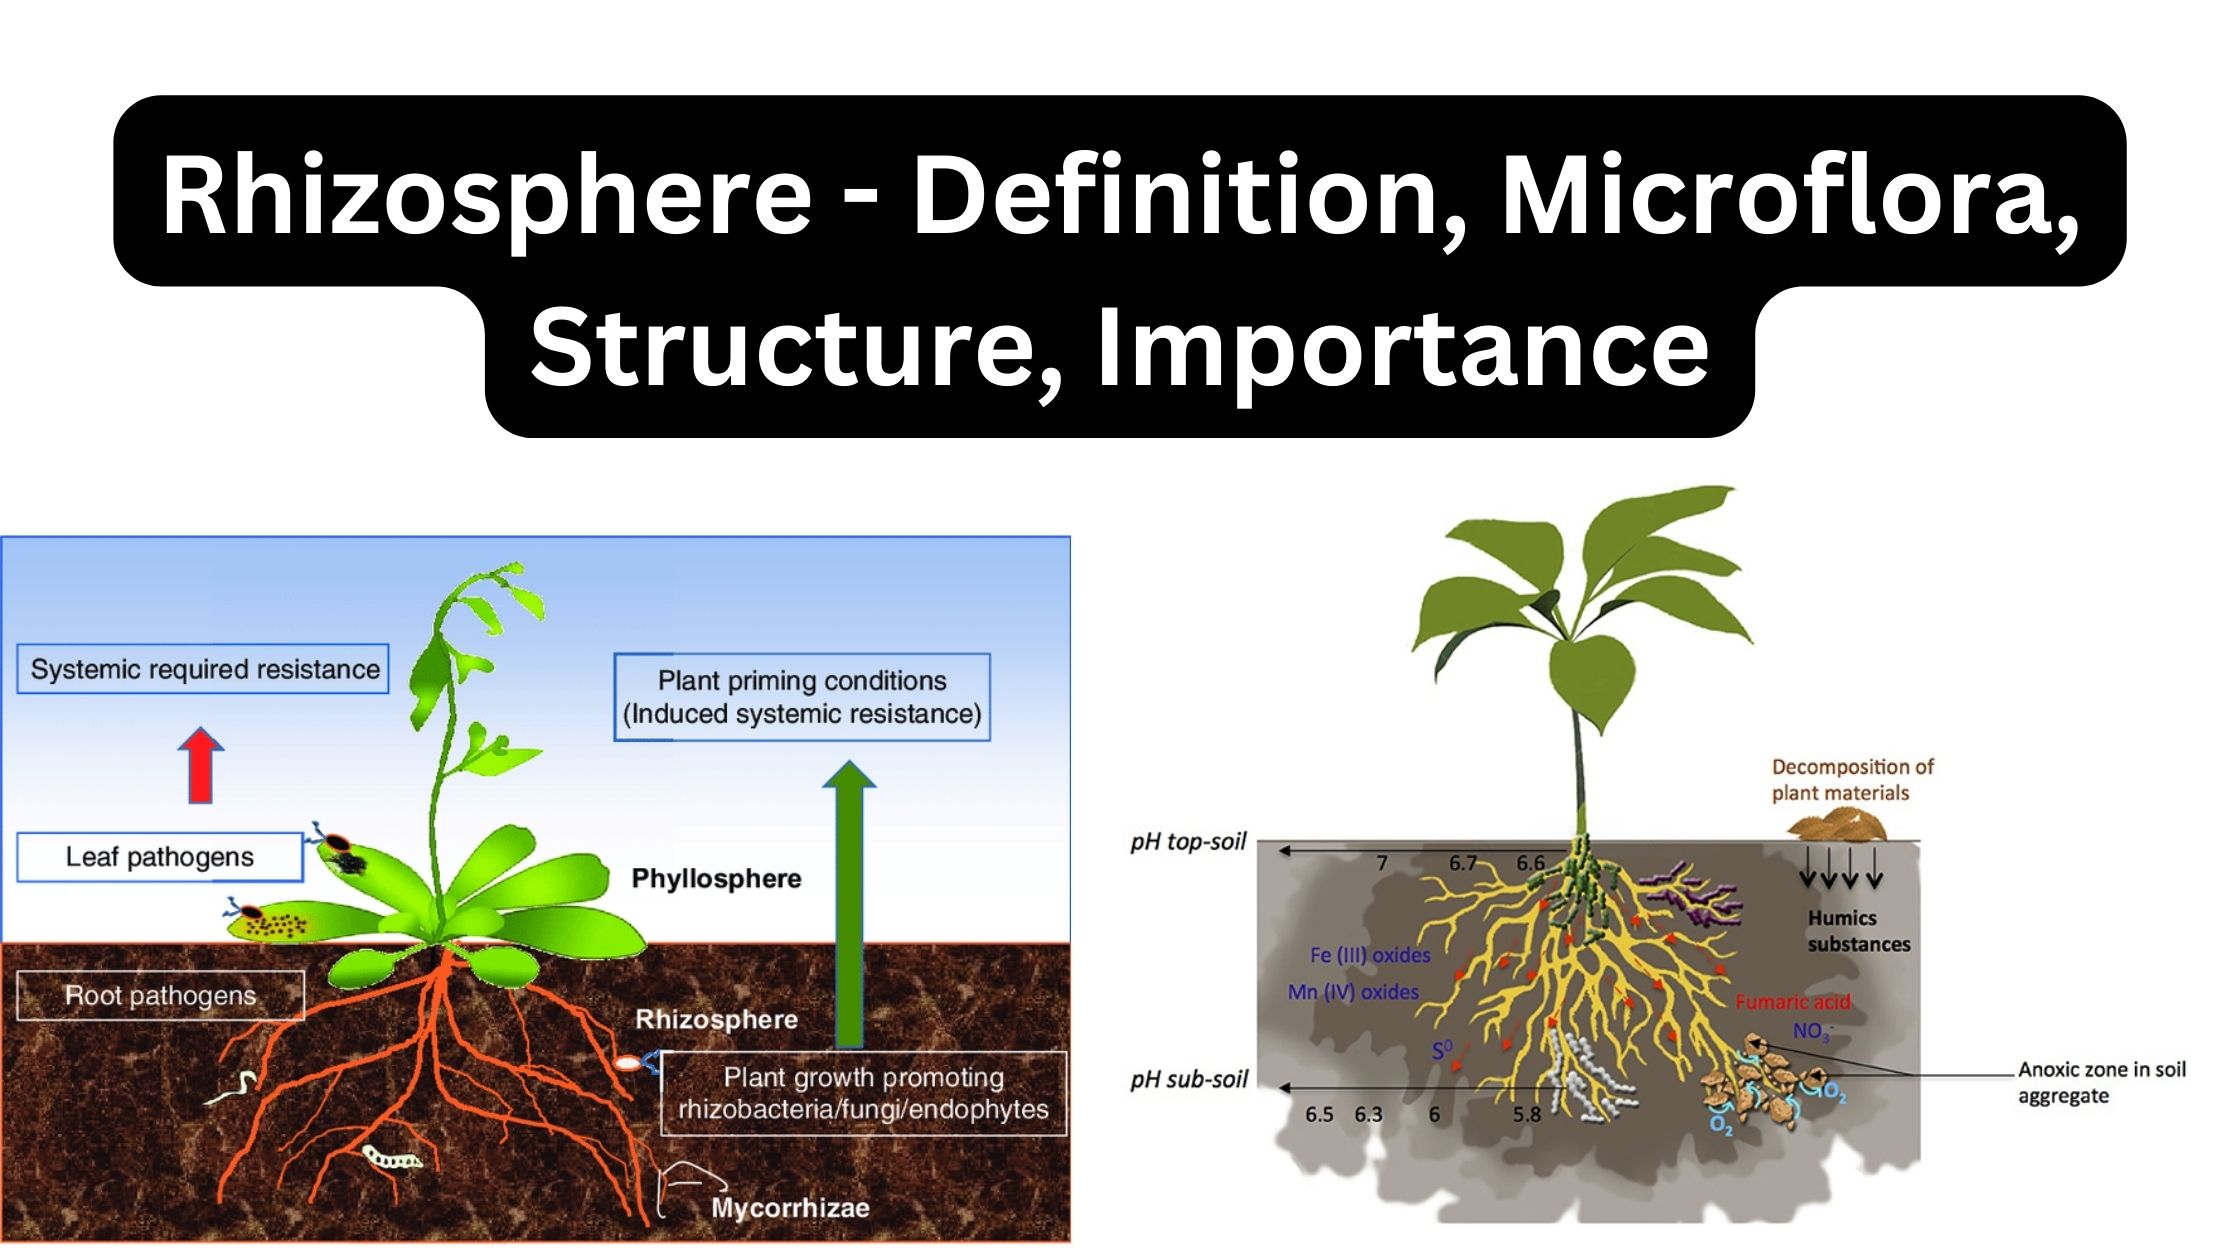 Rhizosphere - Definition, Microflora, Structure, Importance